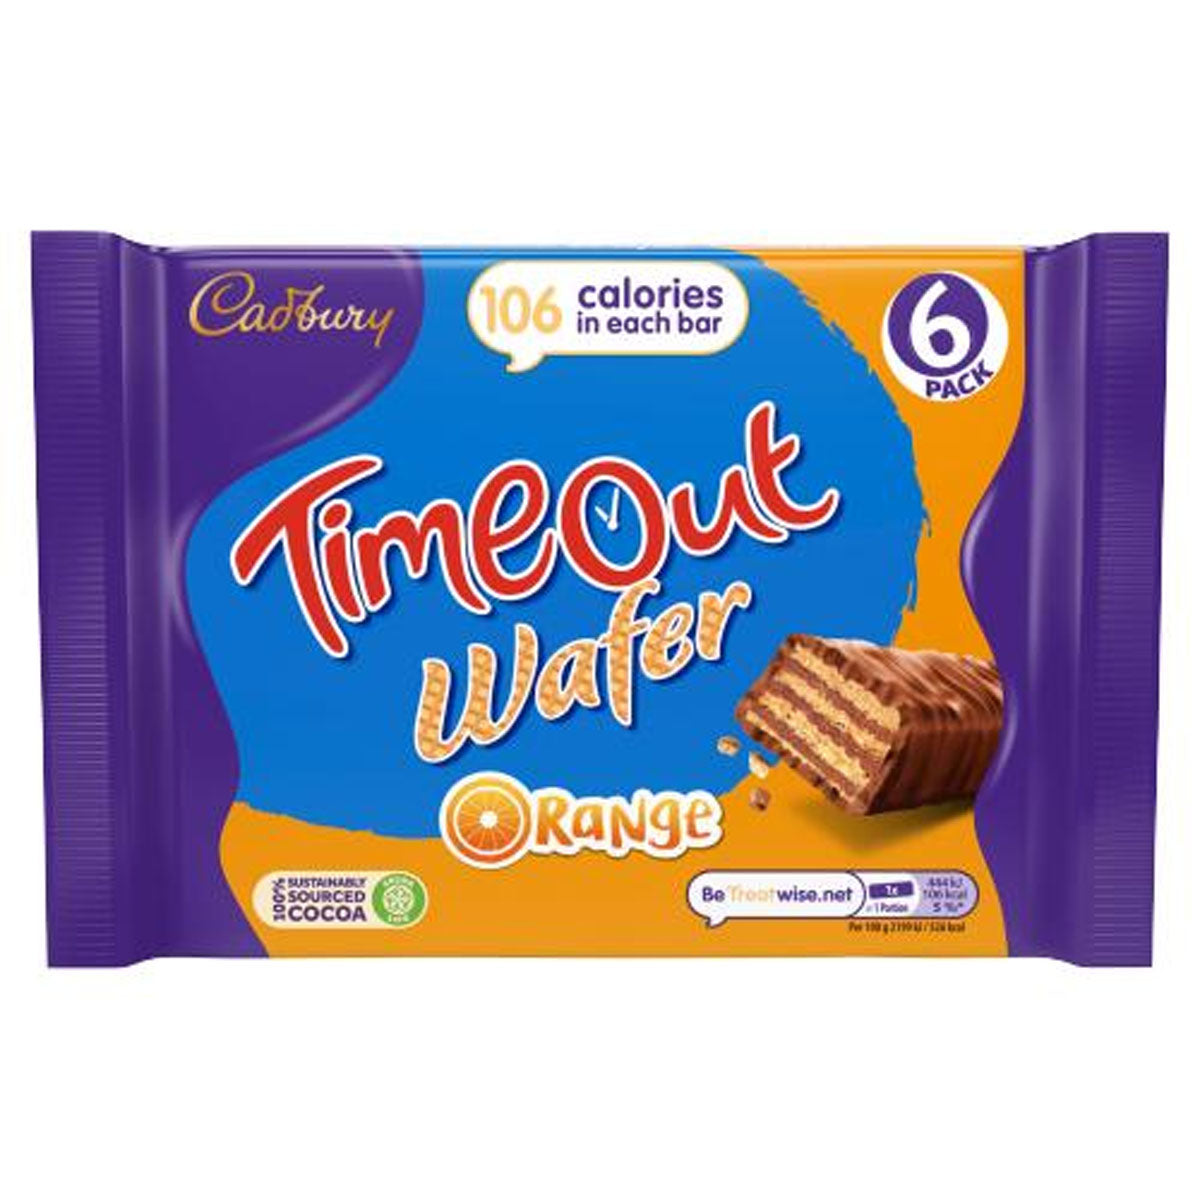 Cadbury's Cadbury - Timeout Wafer Orange - 6x20.2g 6 pcs.